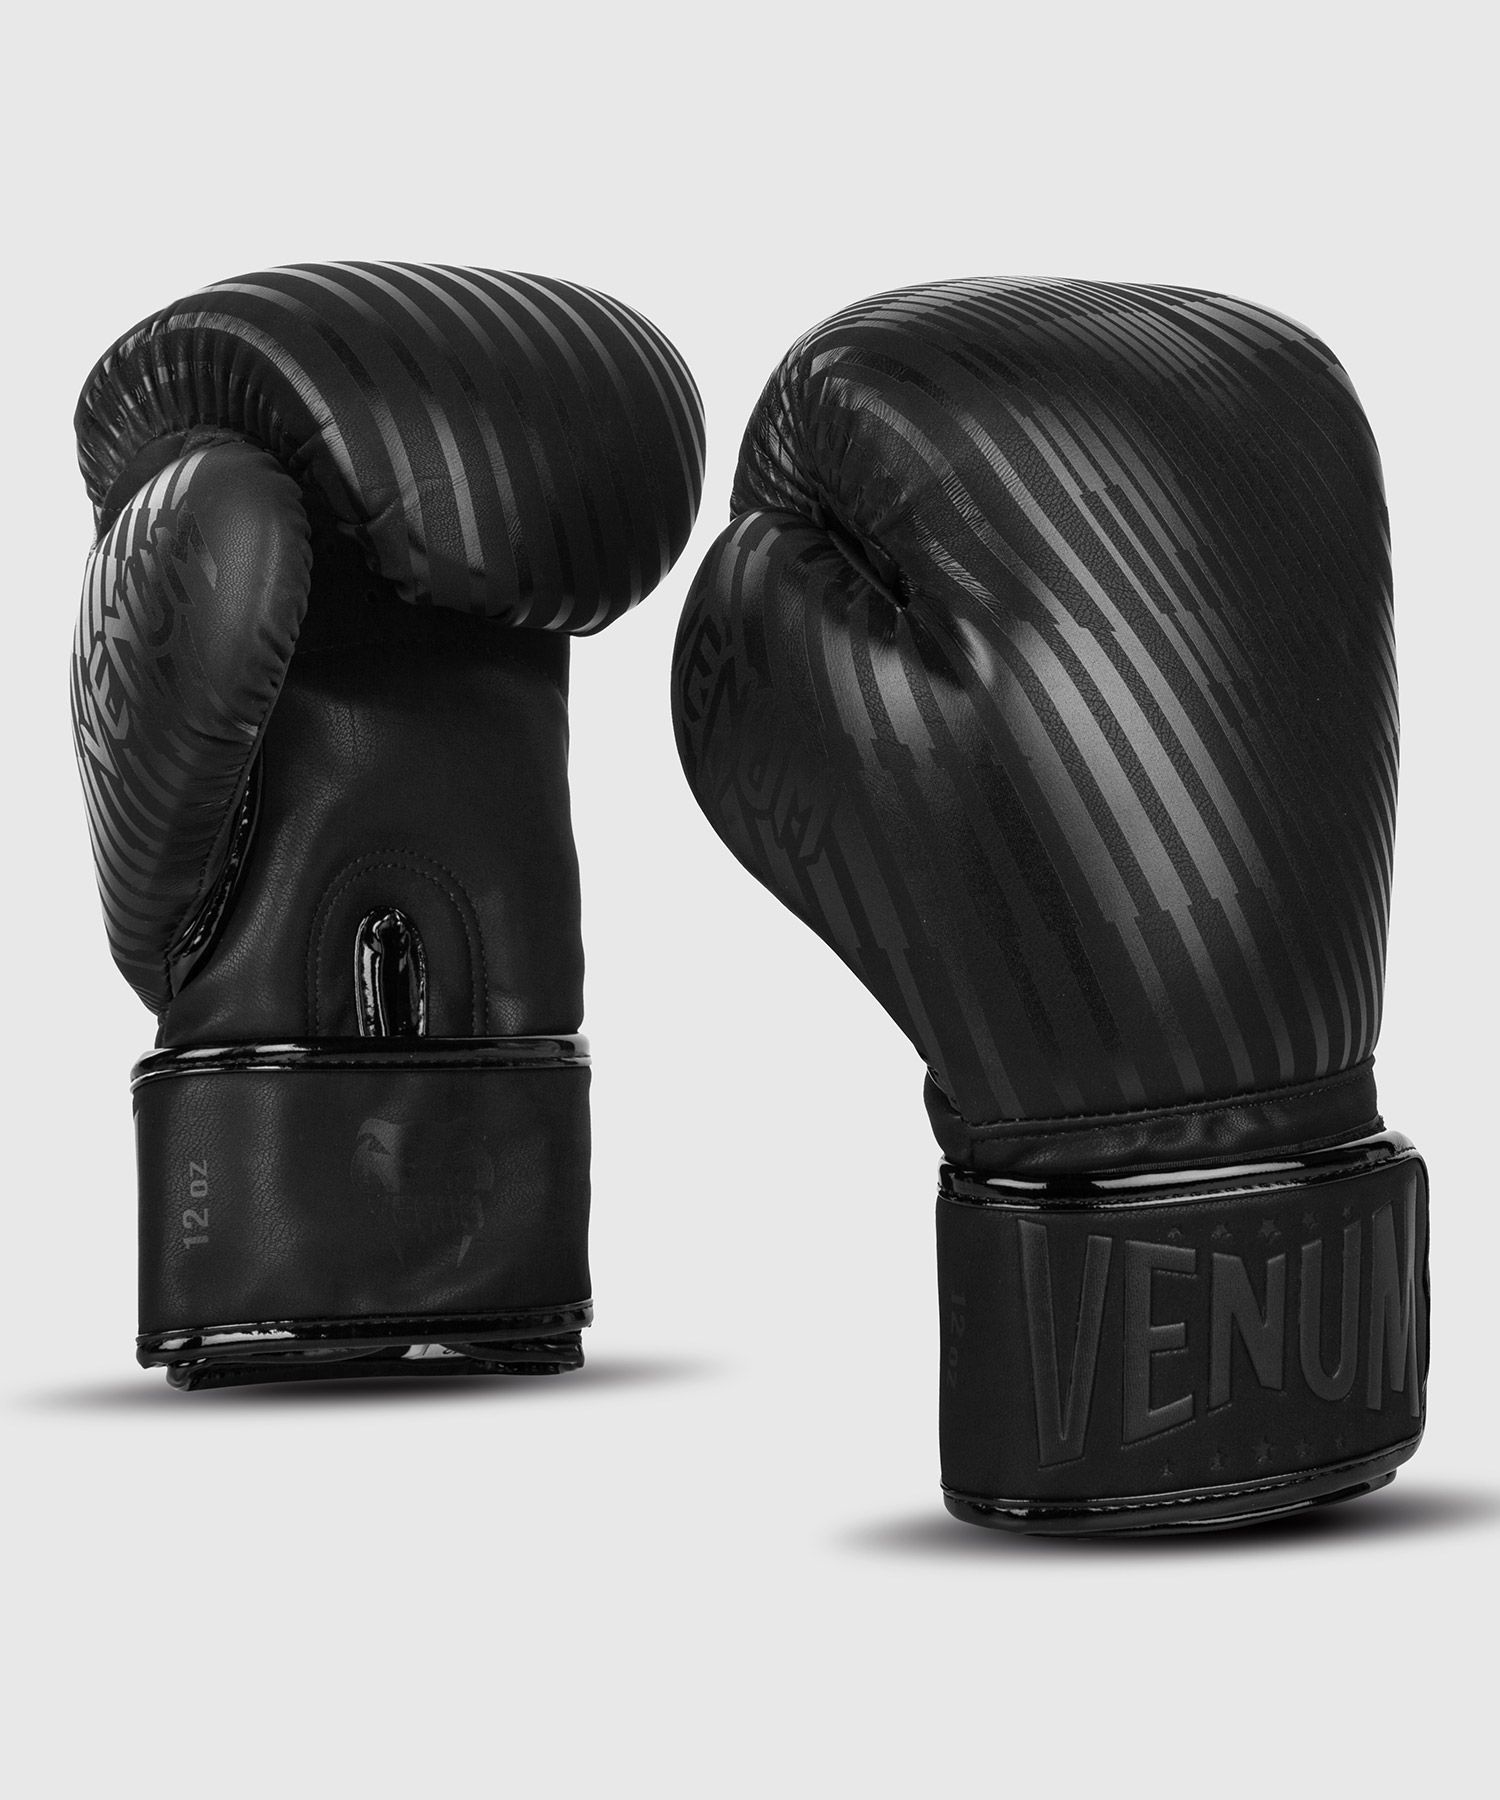 Venum Plasma Boxing Gloves - Black/Black